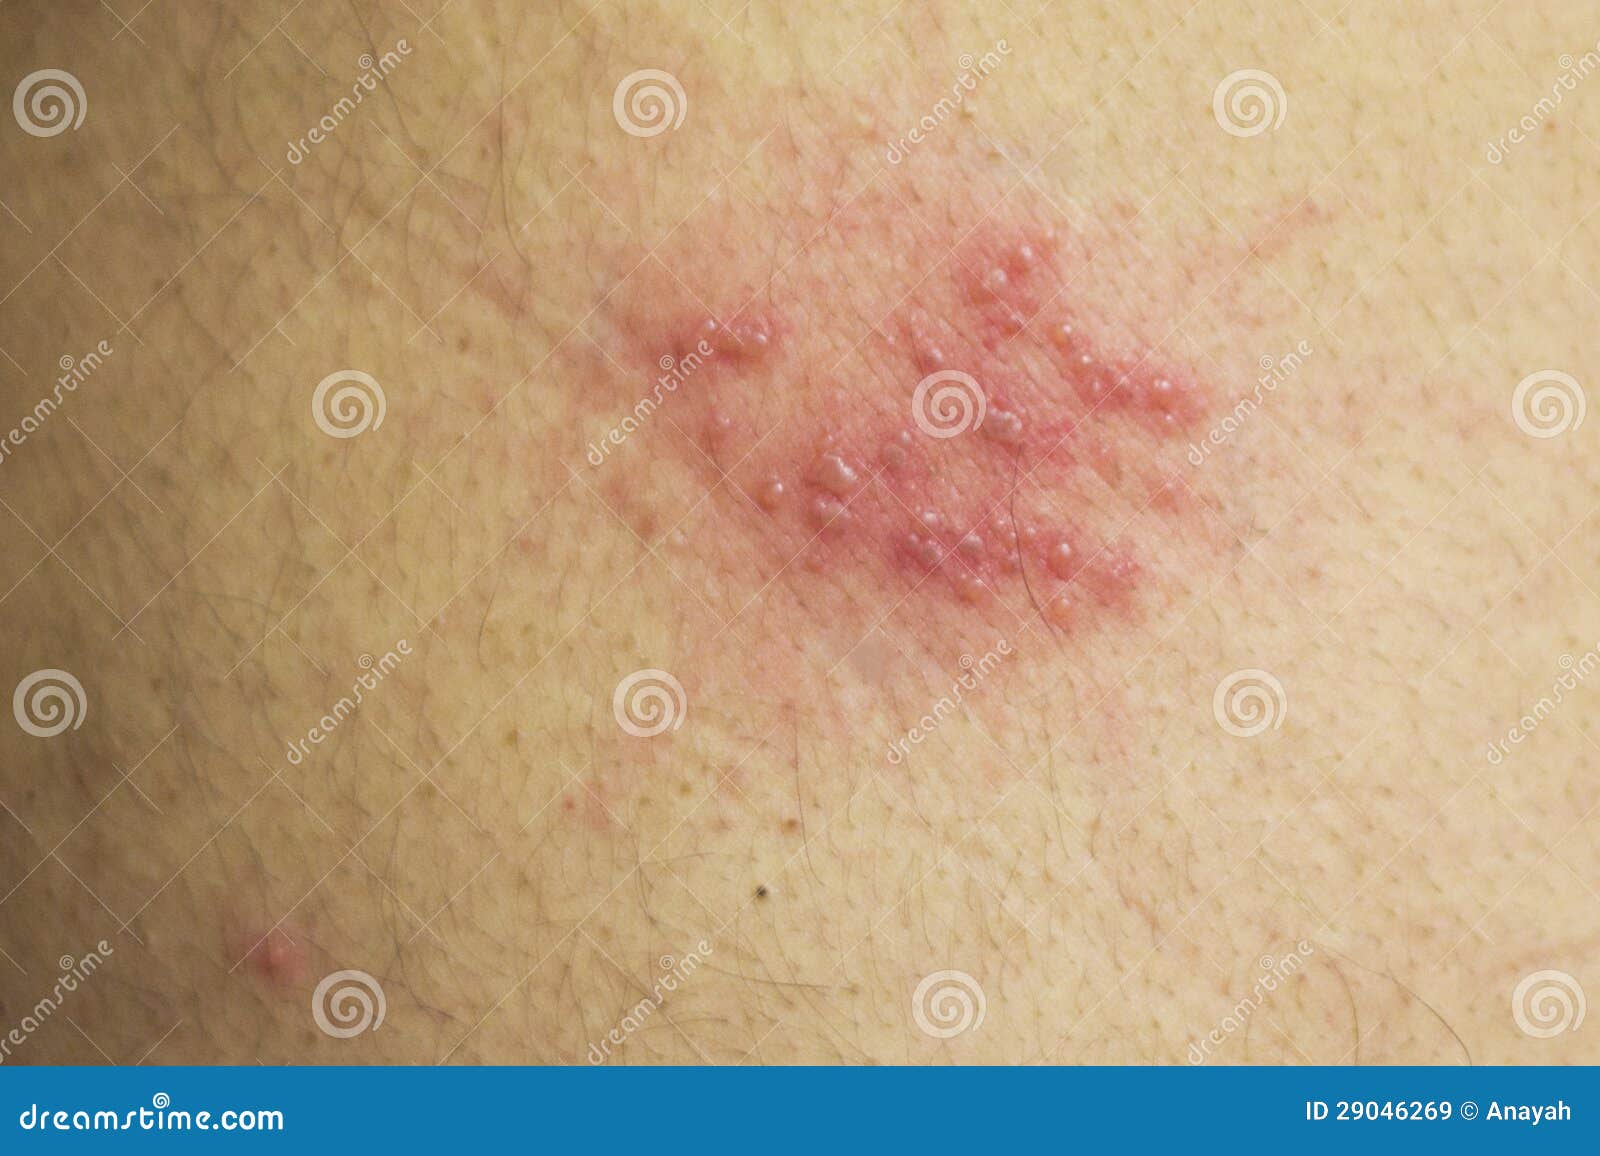 Herpes skin rash | General center | SteadyHealth.com